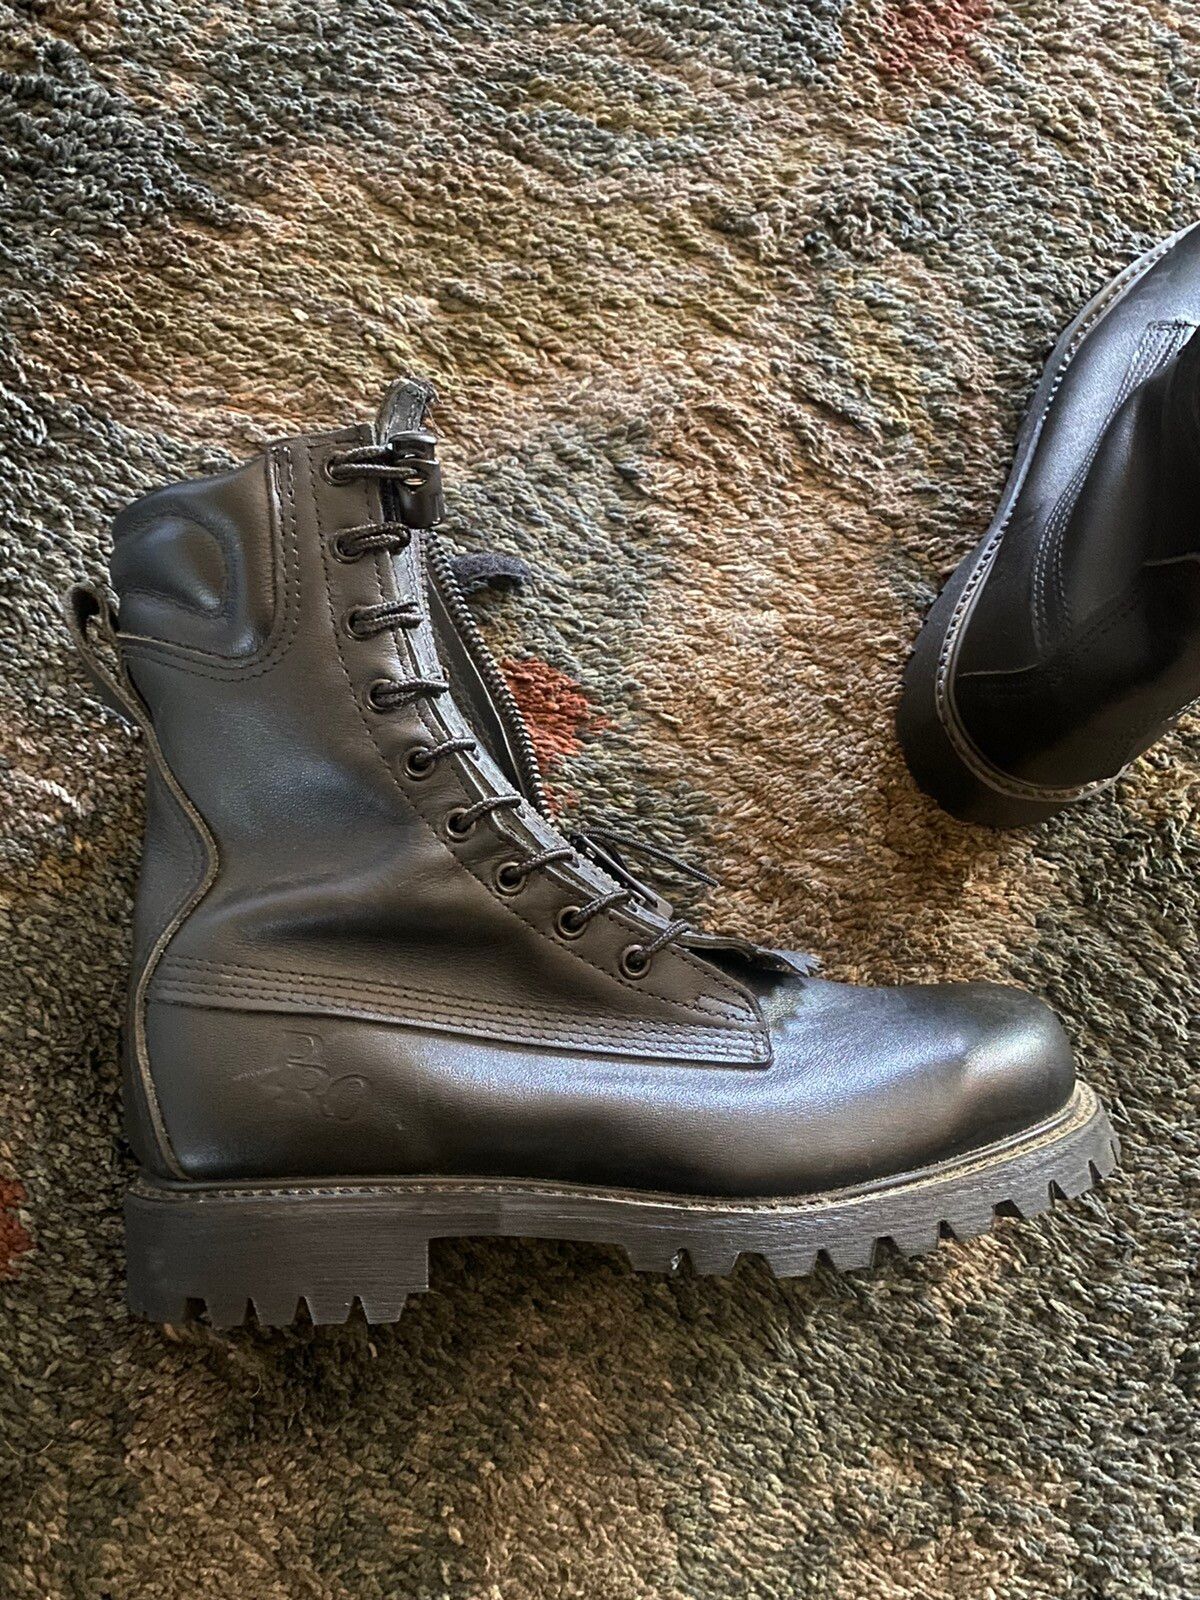 Vintage Boots, balenci striker alternatives | Grailed